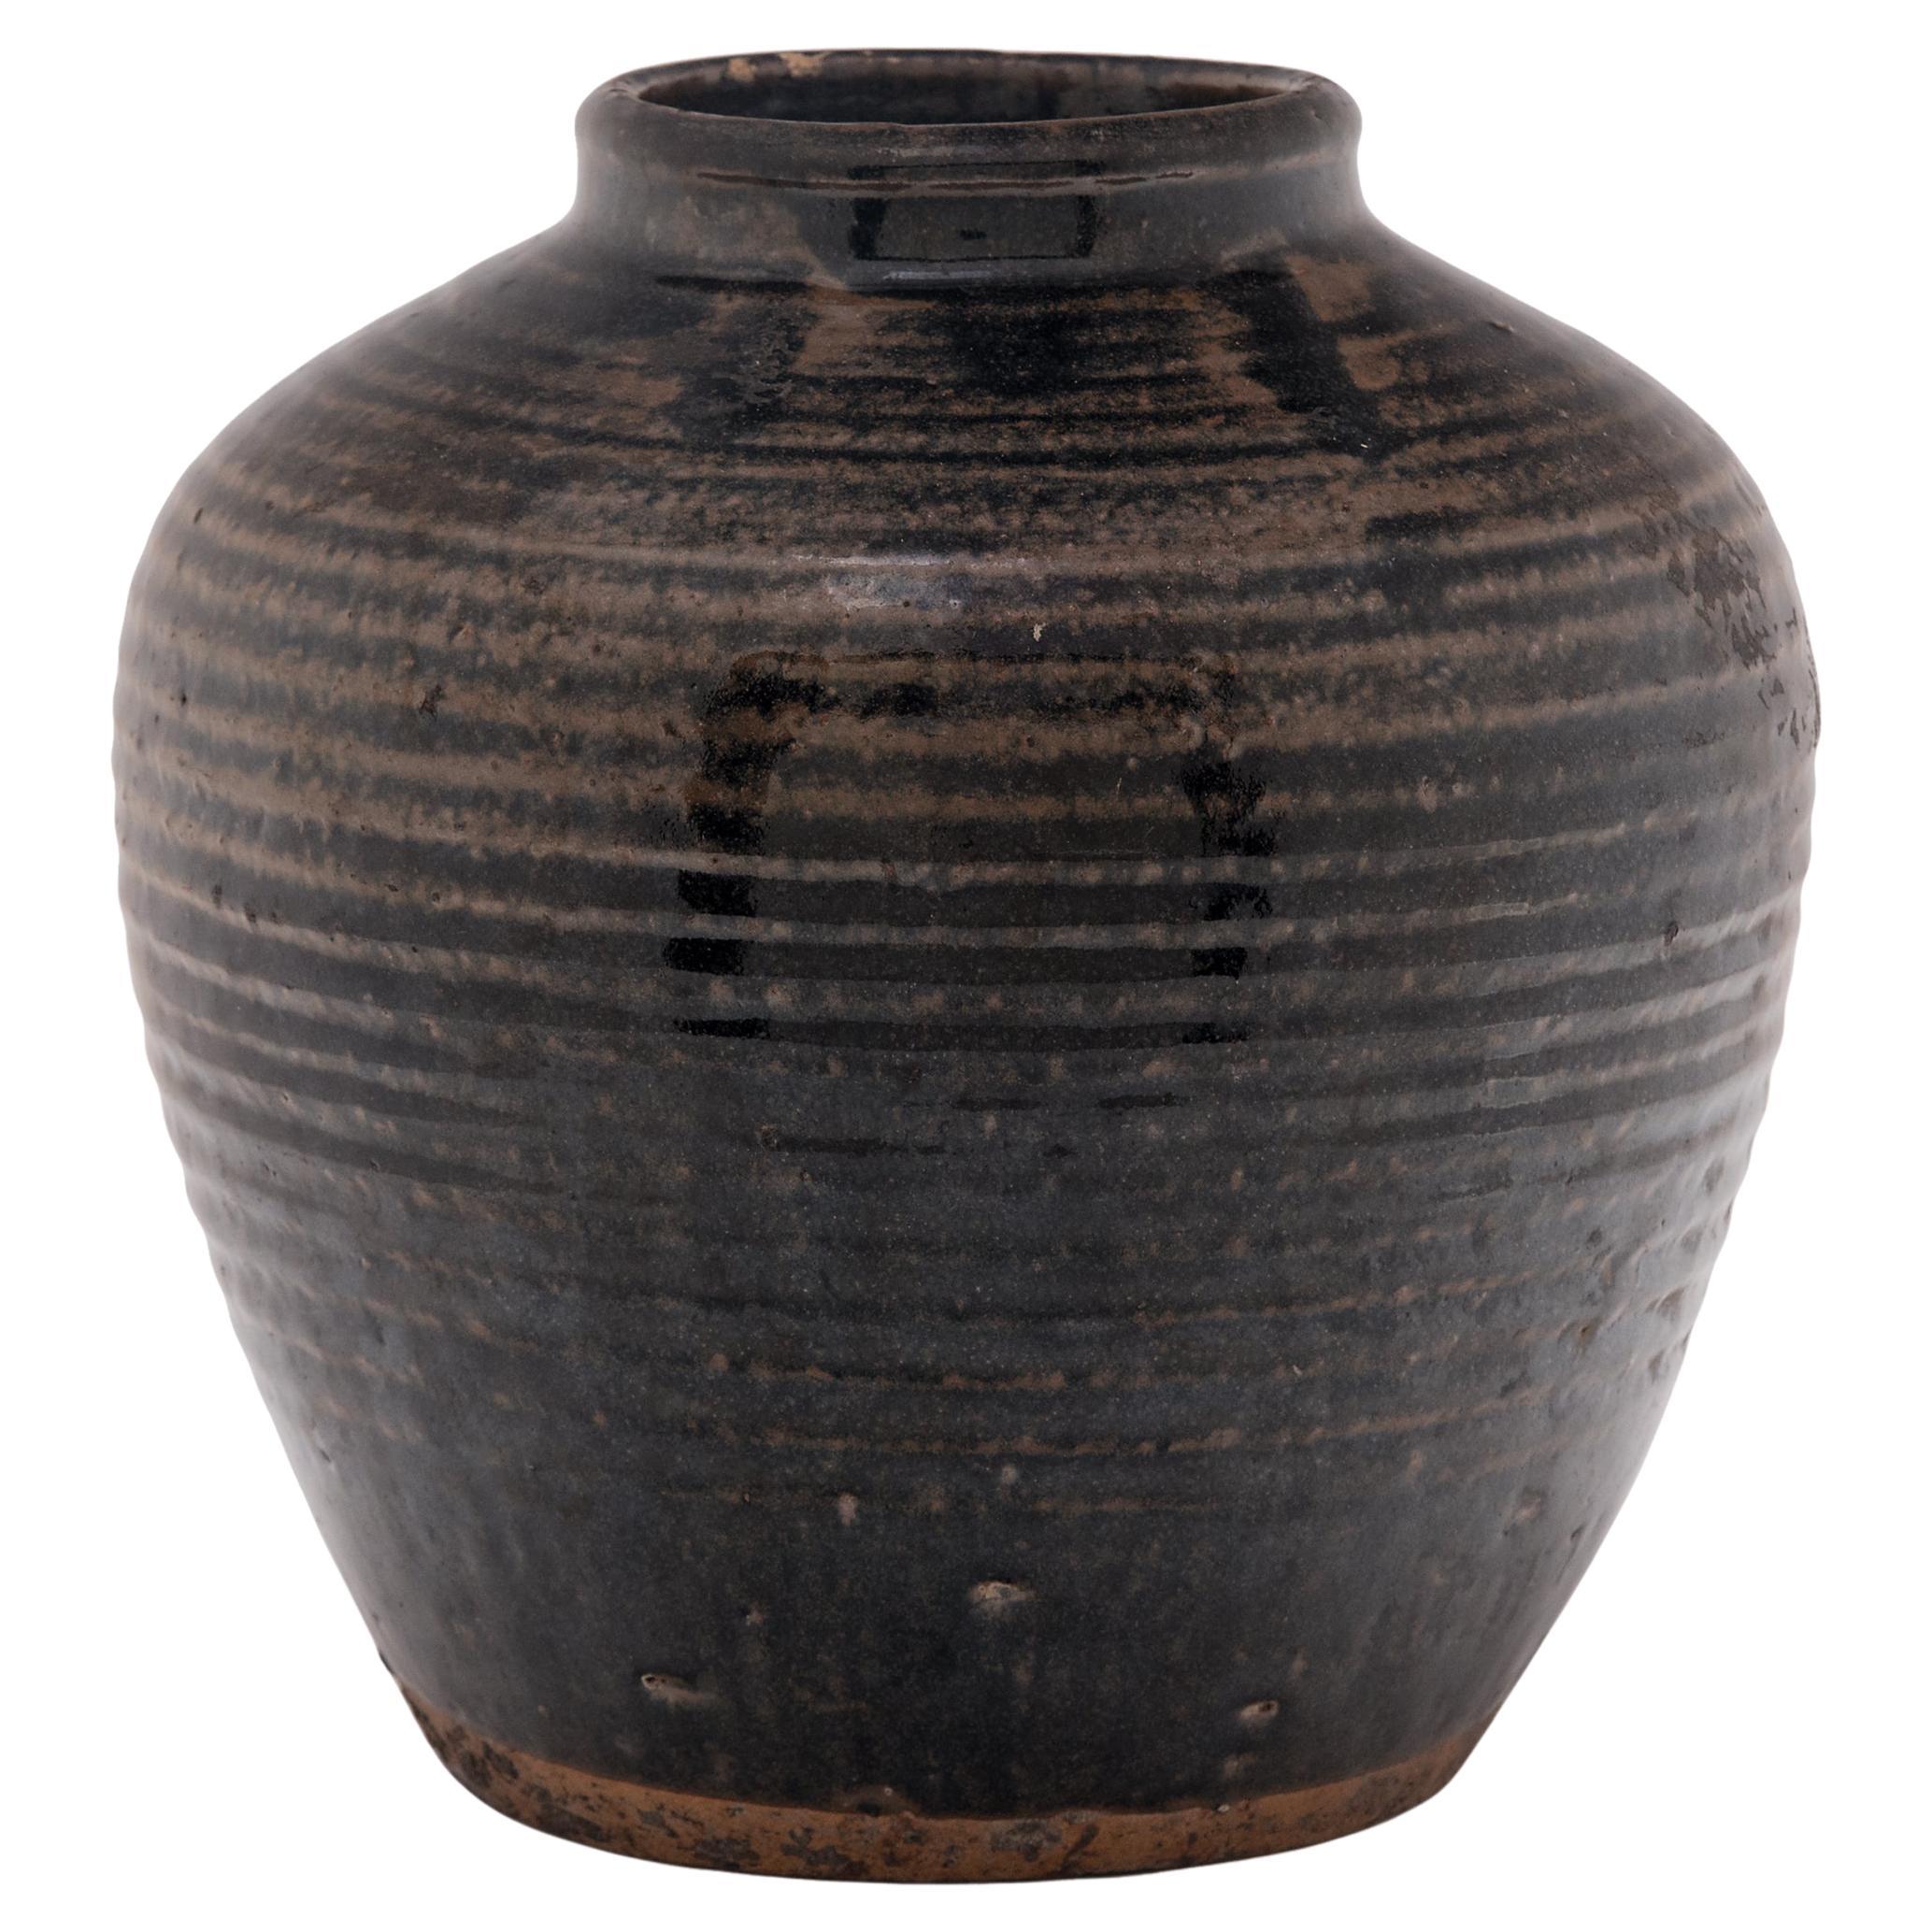 Chinese Brown Glazed Storage Jar, c. 1900